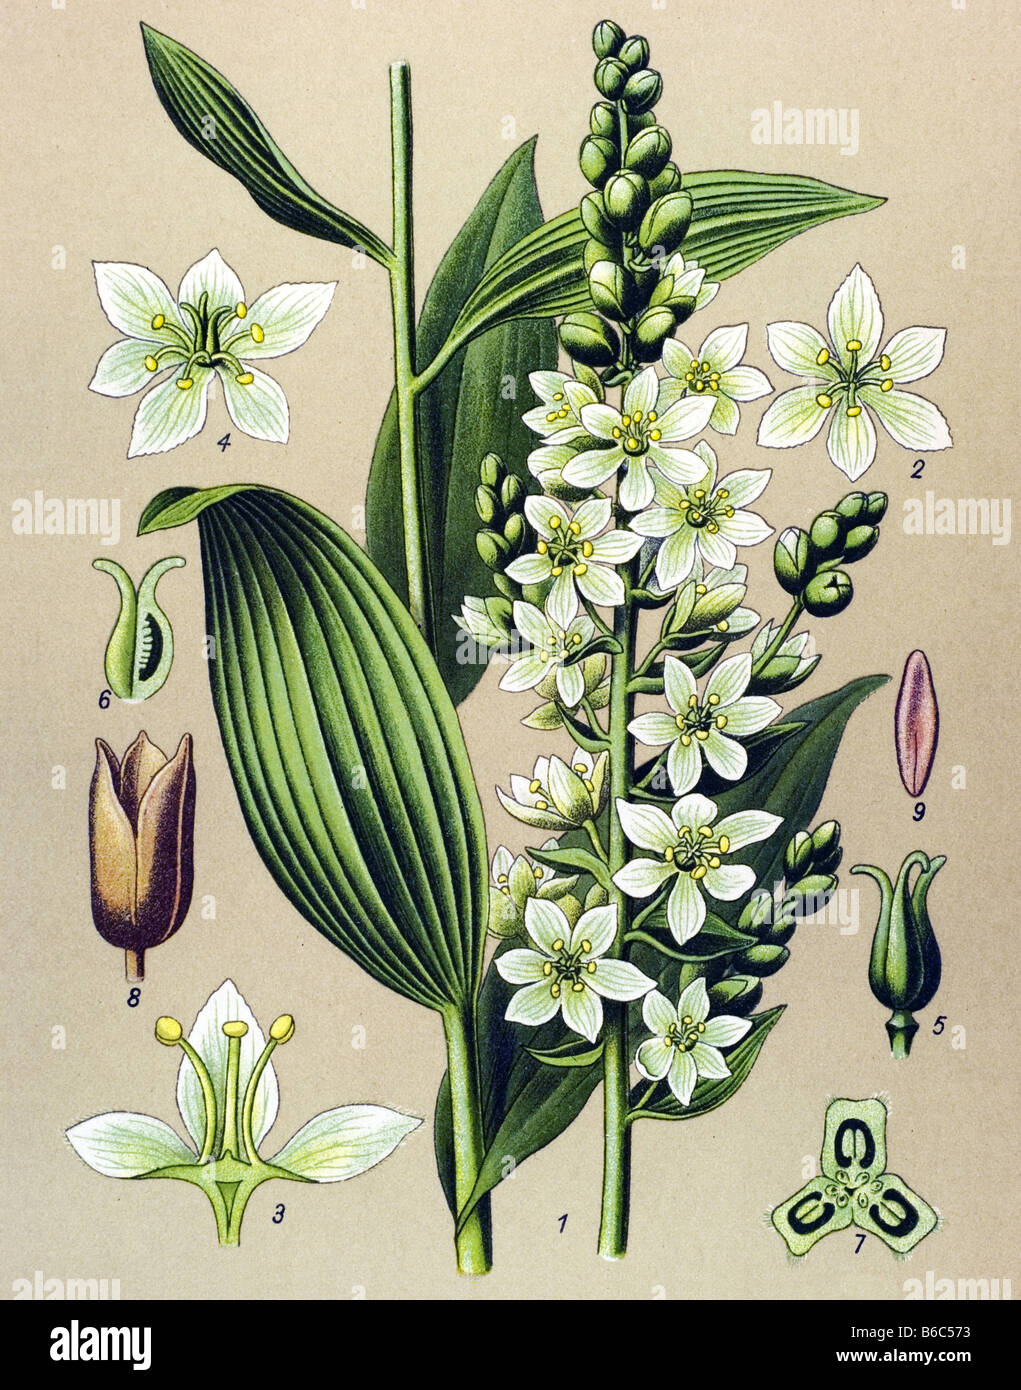 Veratum album, European White Hellebore, poisonous plants illustrations Stock Photo